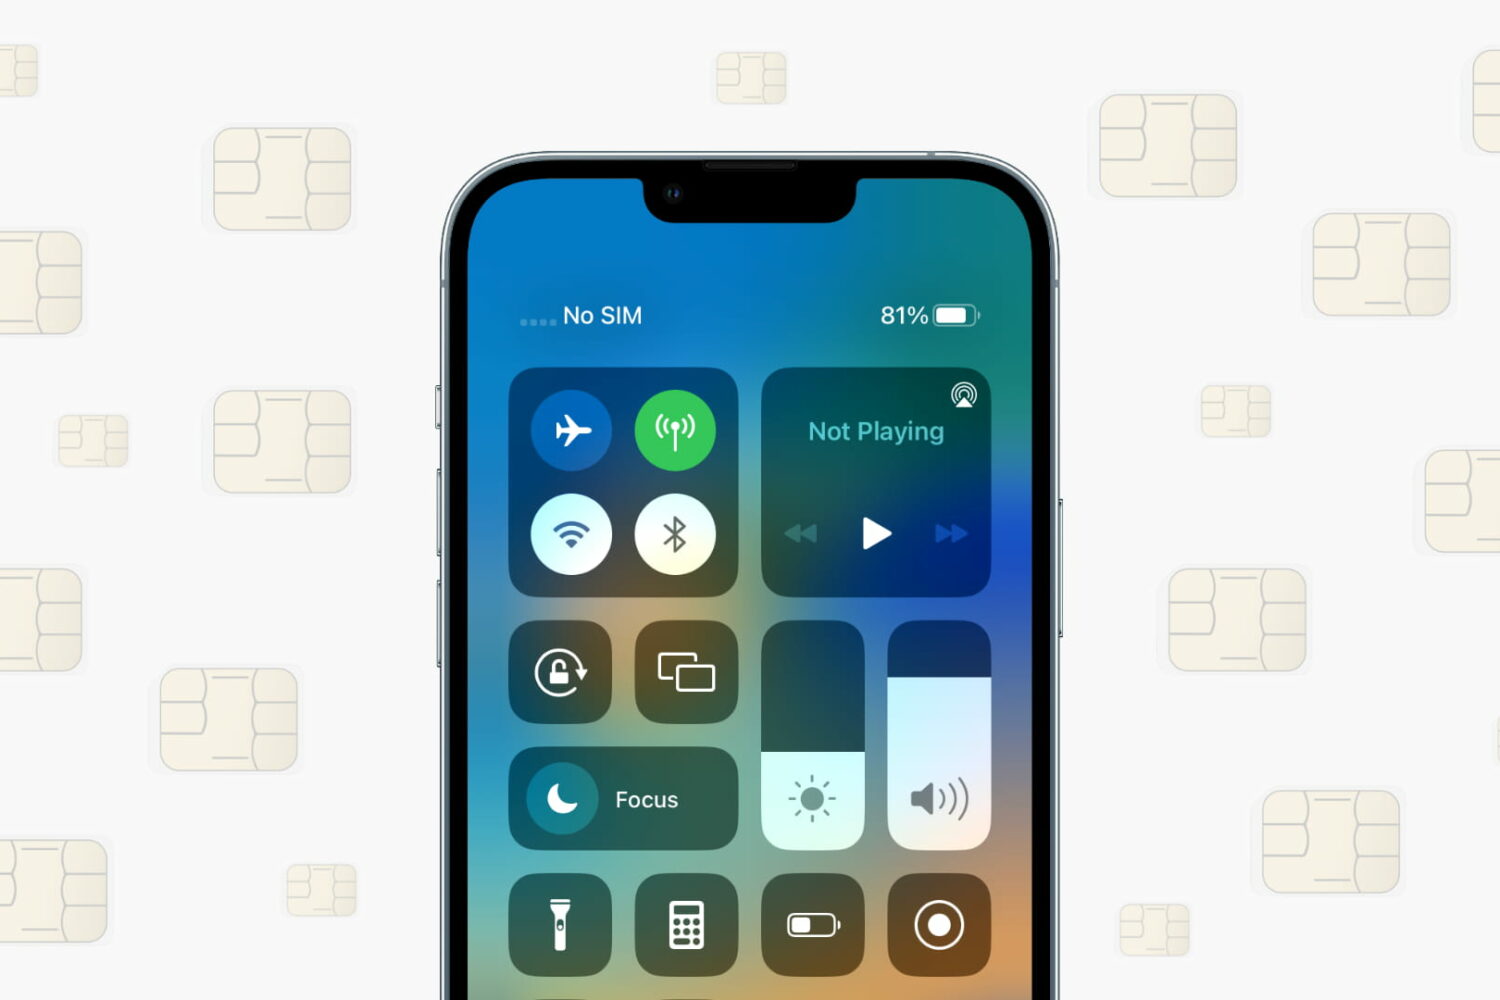 iPhone showing No SIM error on screen